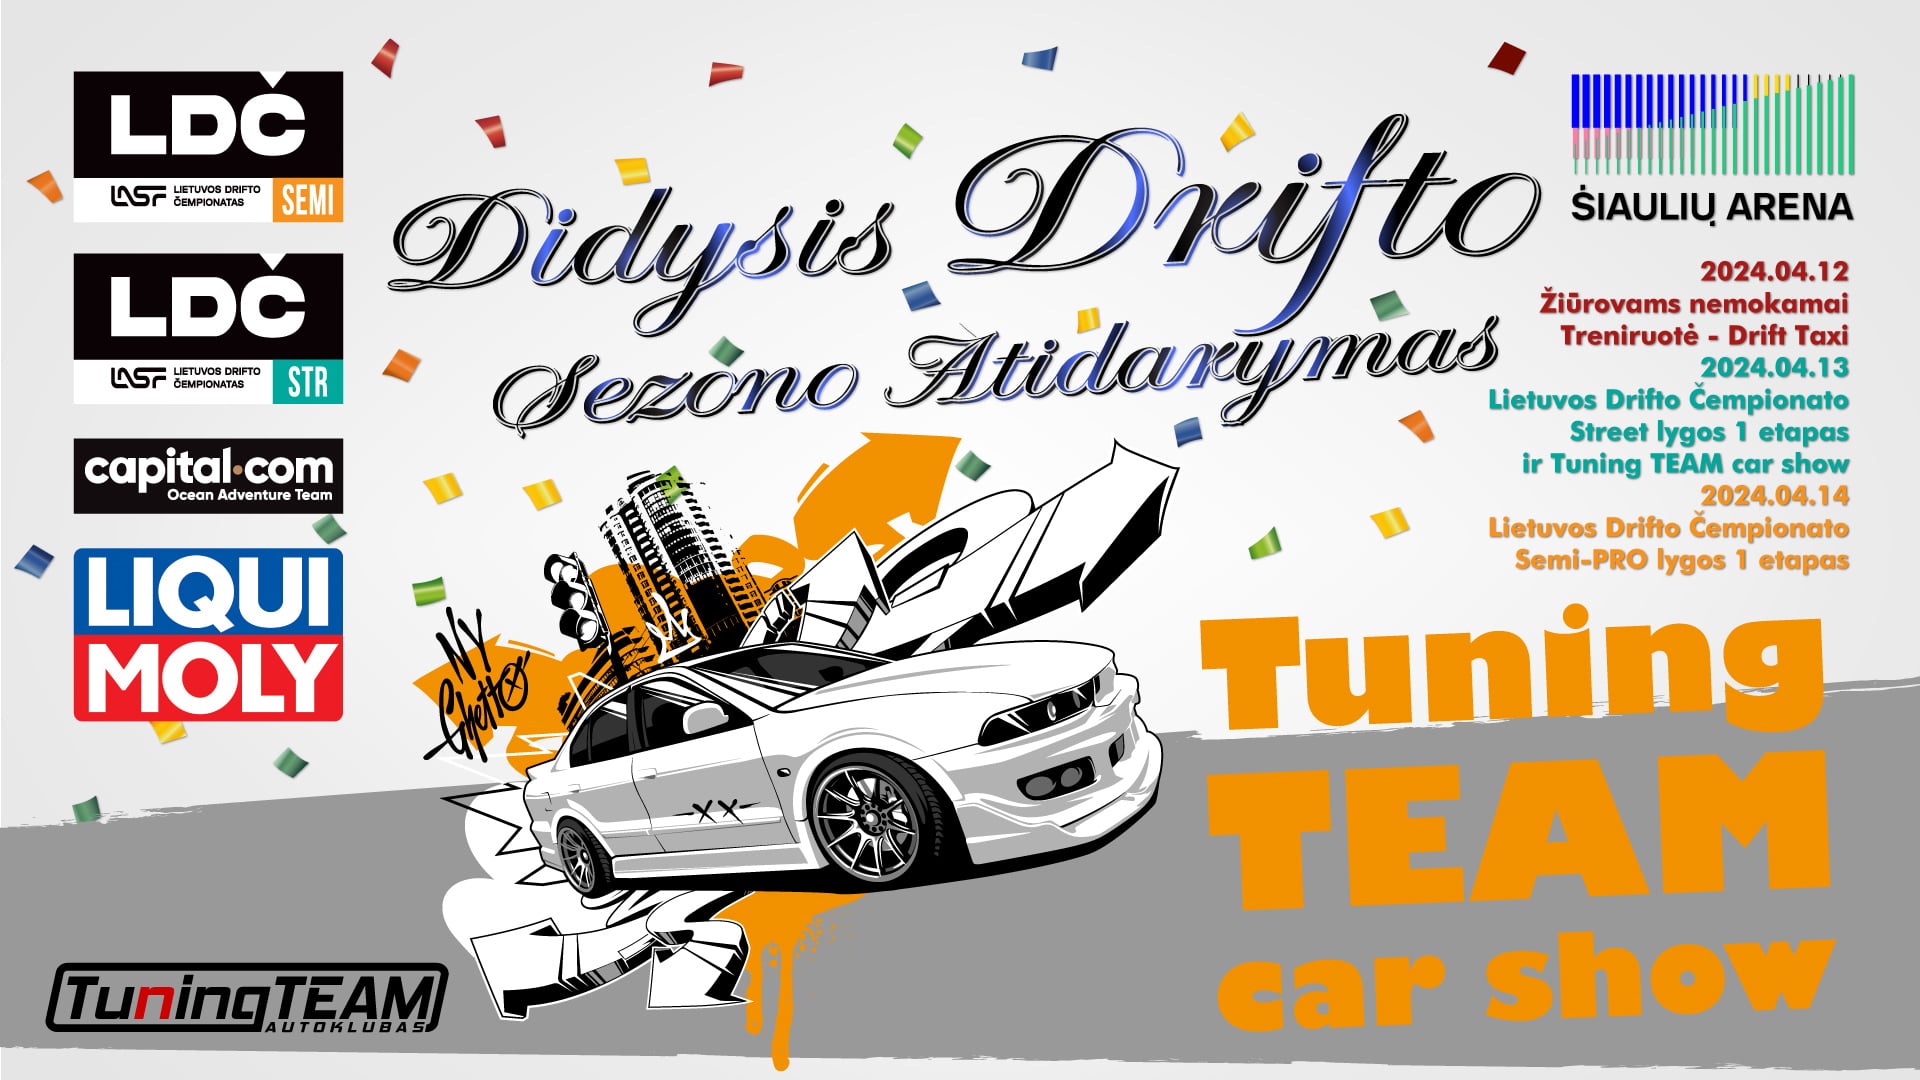 Tuning TEAM car show @ drift season opening